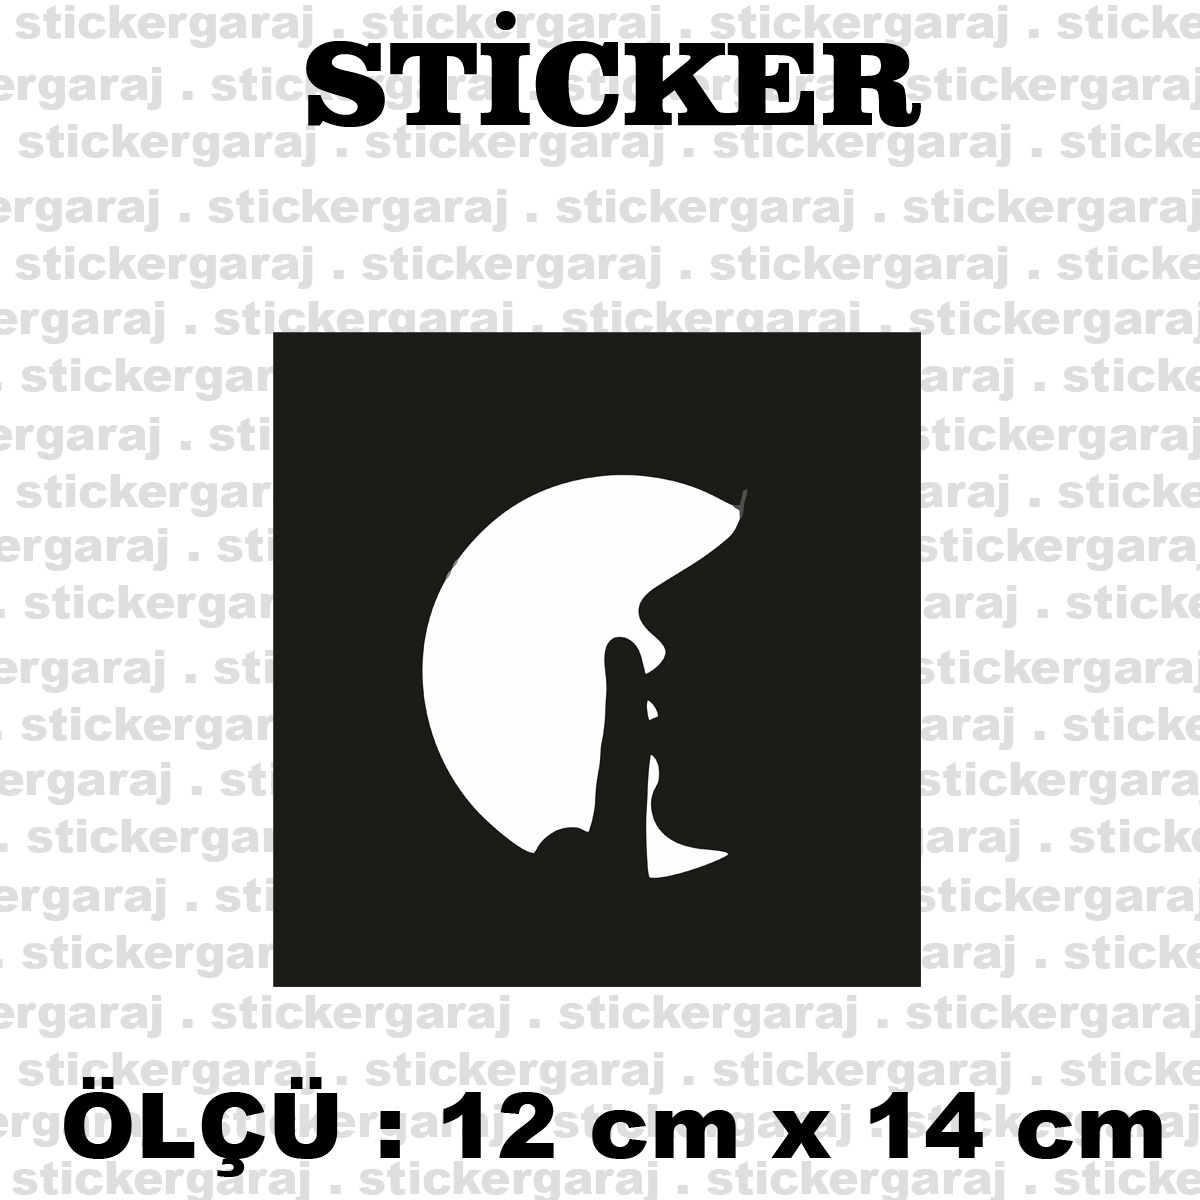 susu.cdr 12 14 - Kadın sus dudak işaret sticker